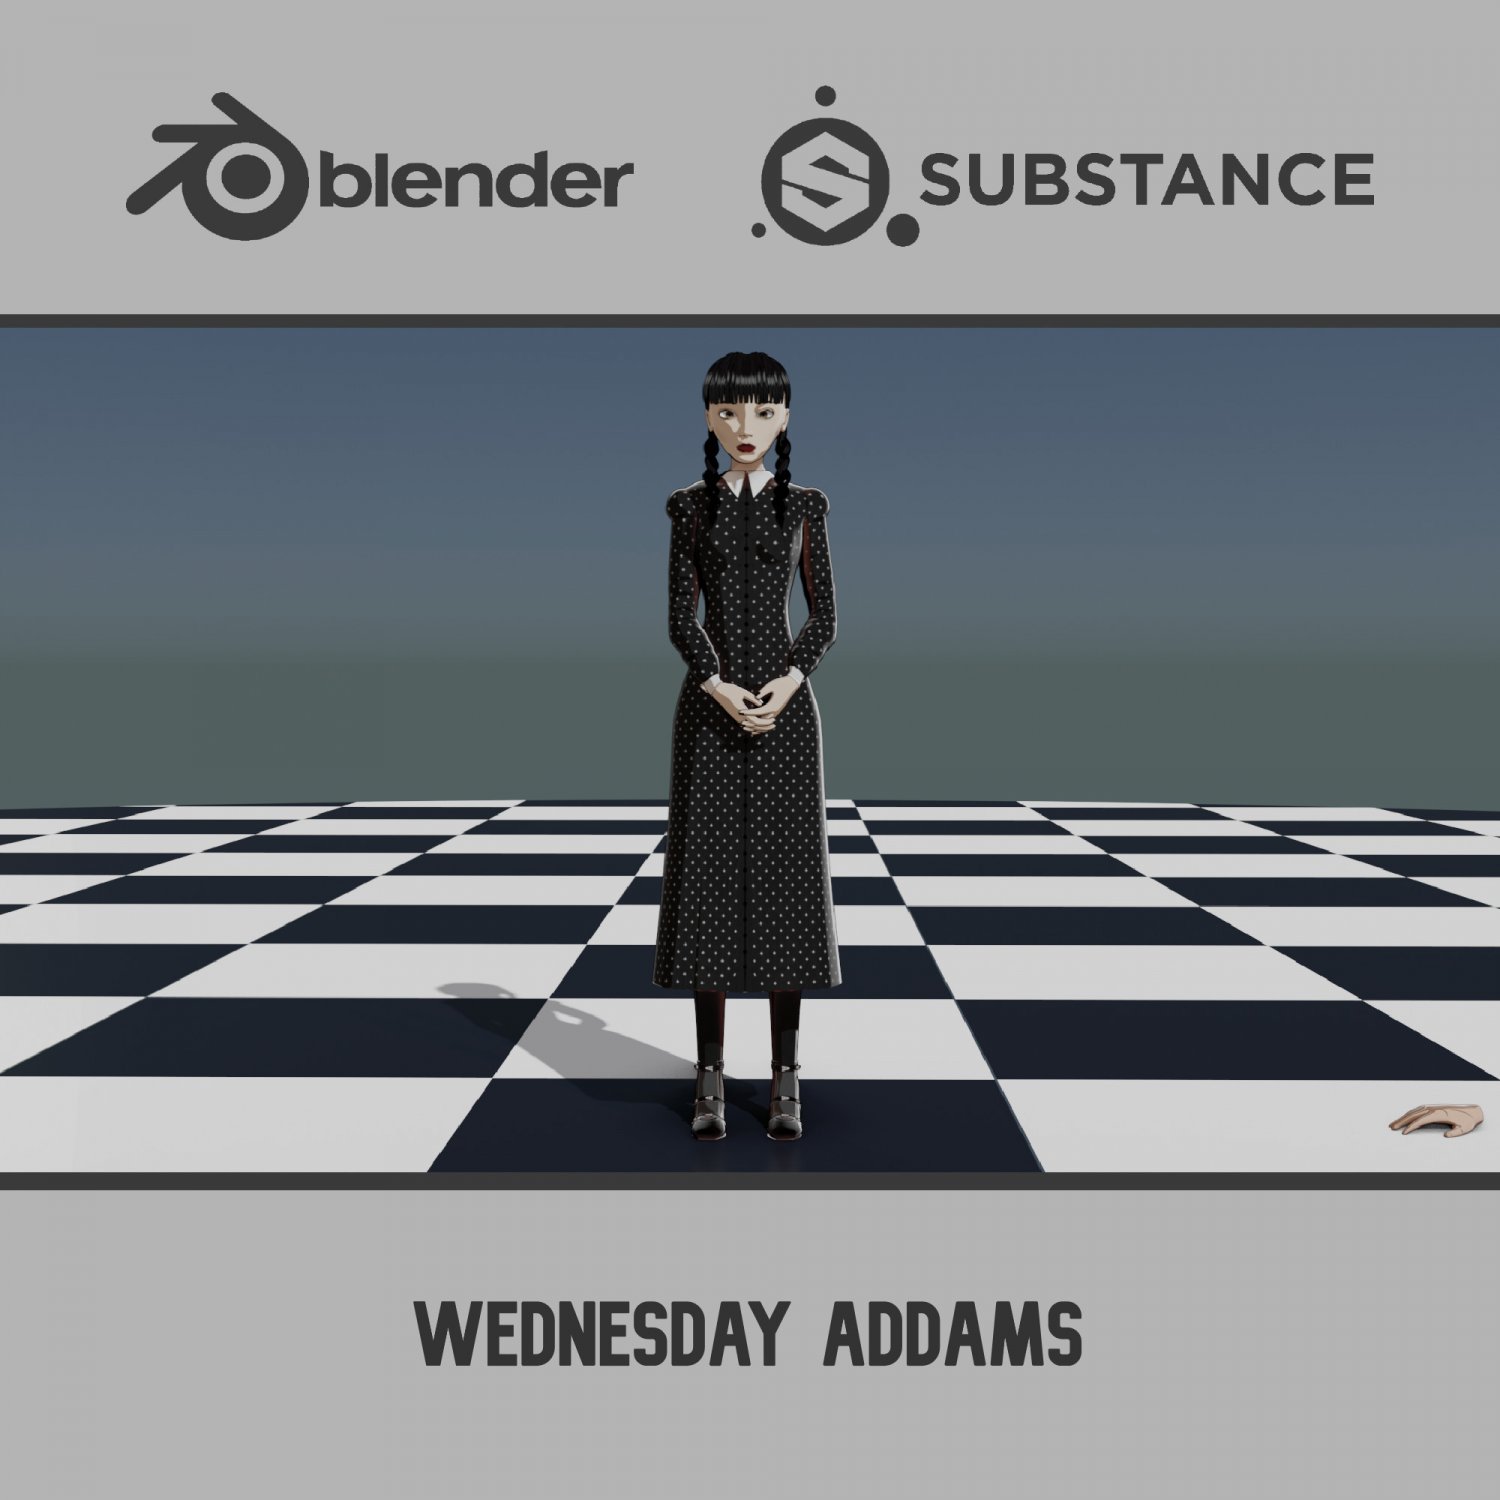 Download Wednesday Addams Addams Addams Family Royalty-Free Stock